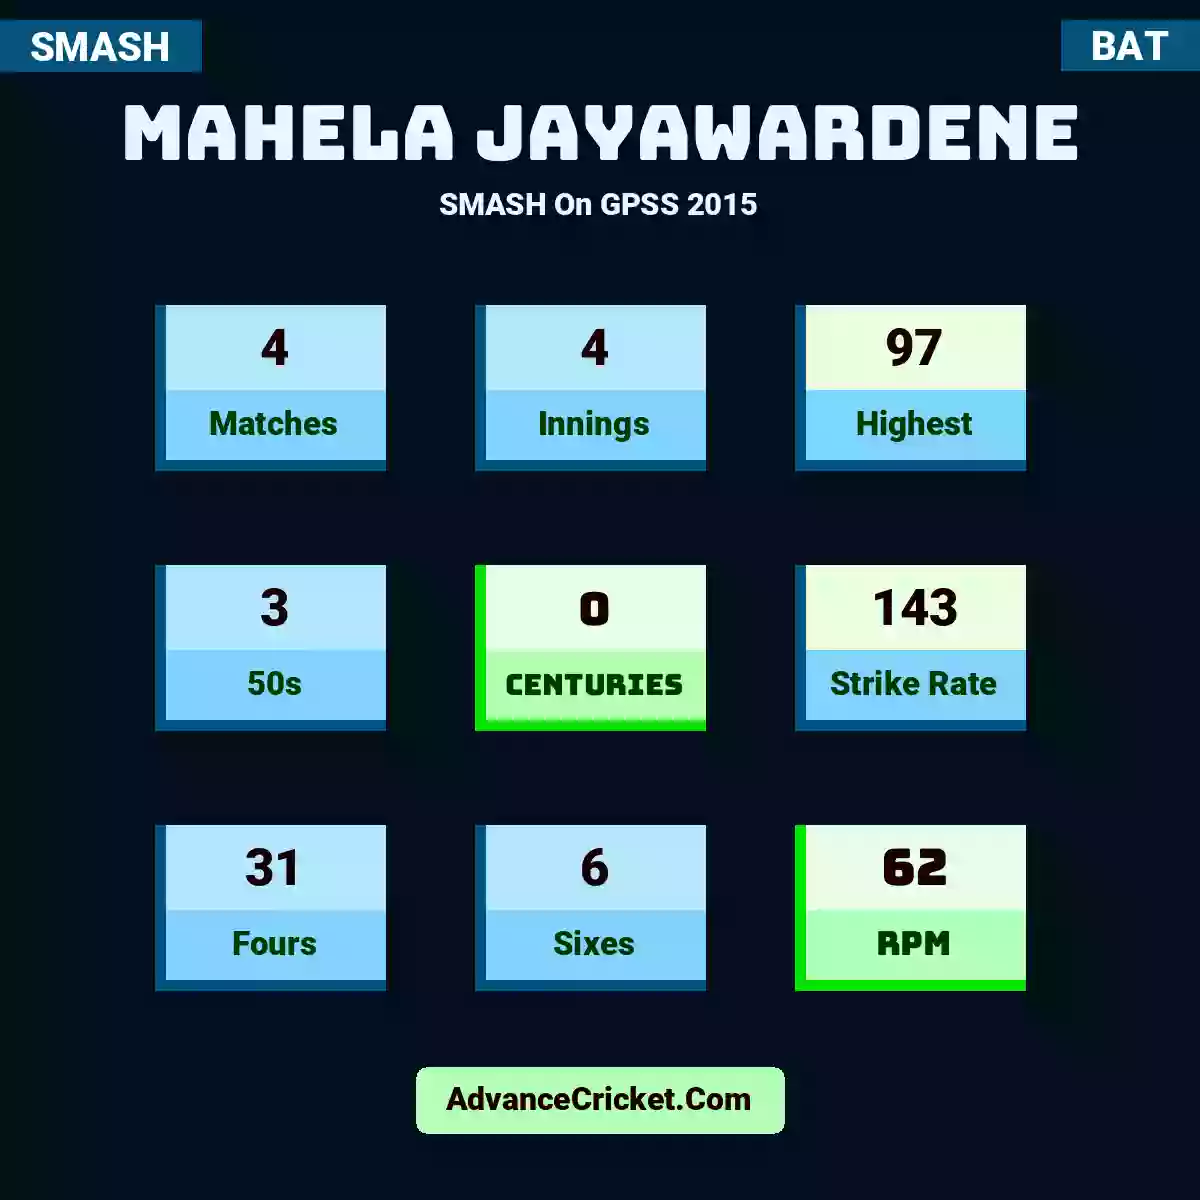 Mahela Jayawardene SMASH  On GPSS 2015, Mahela Jayawardene played 4 matches, scored 97 runs as highest, 3 half-centuries, and 0 centuries, with a strike rate of 143. M.Jayawardene hit 31 fours and 6 sixes, with an RPM of 62.